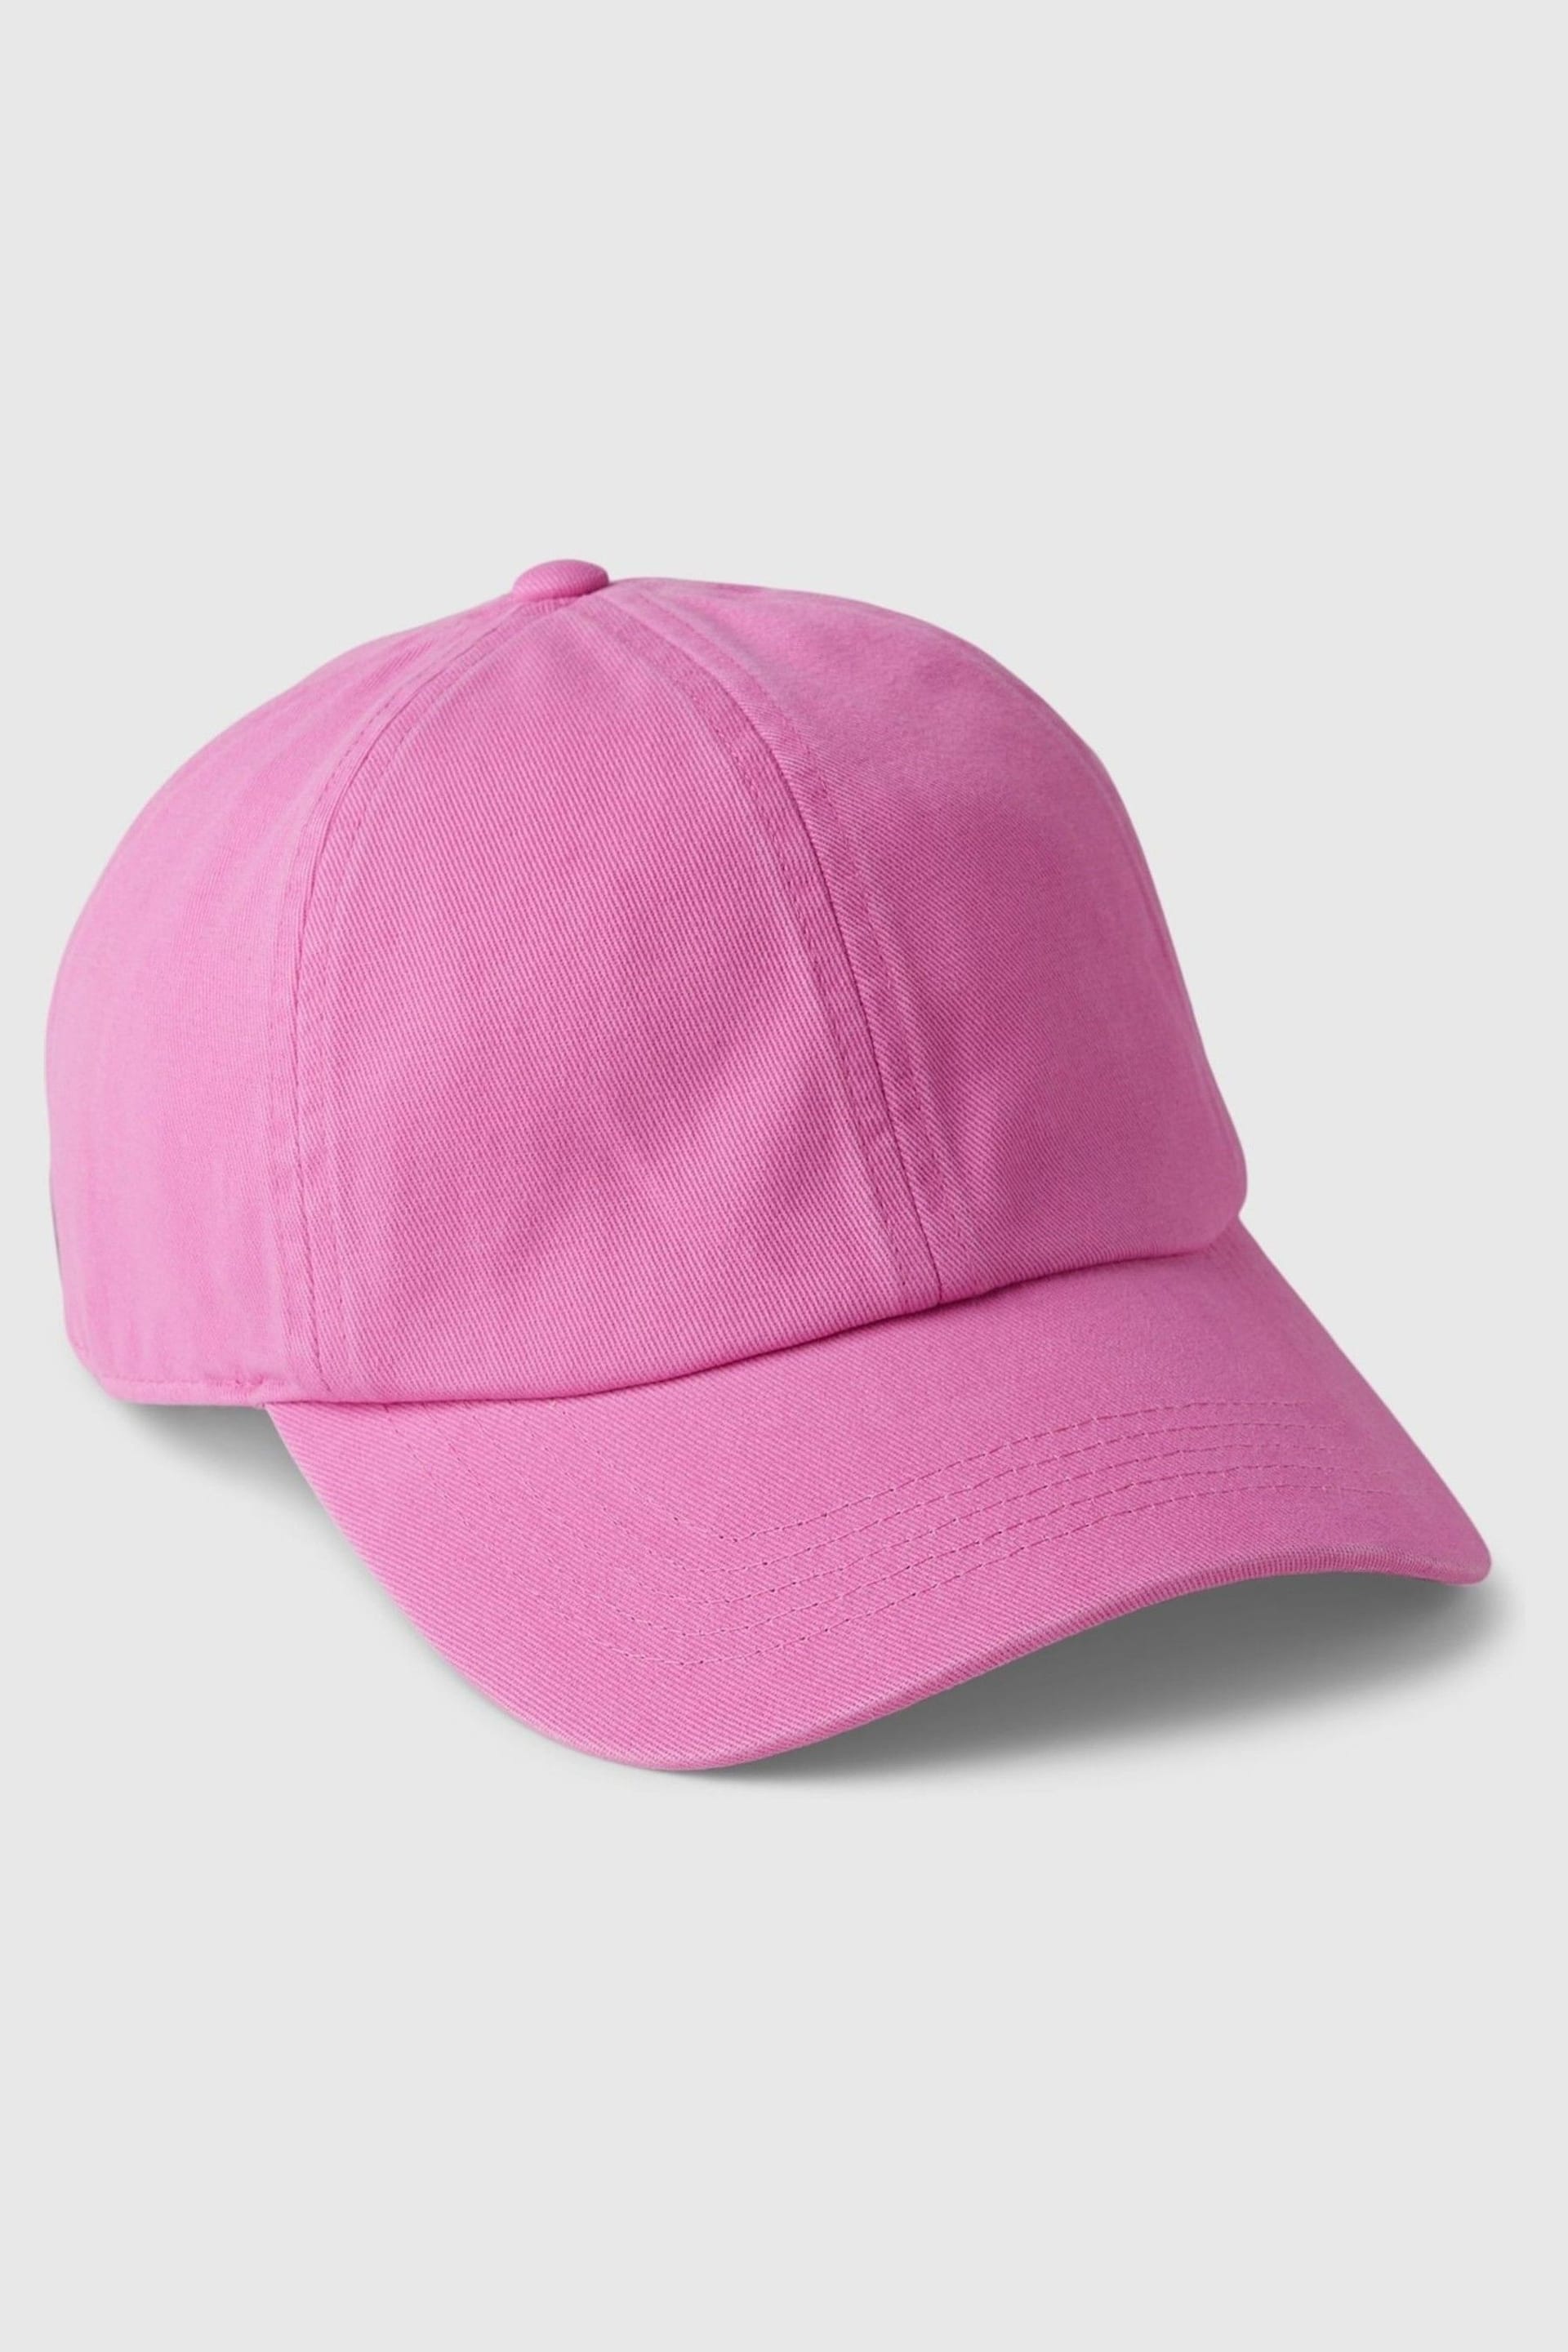 Gap Pink Organic Cotton Washed Baseball Hat - Image 1 of 2